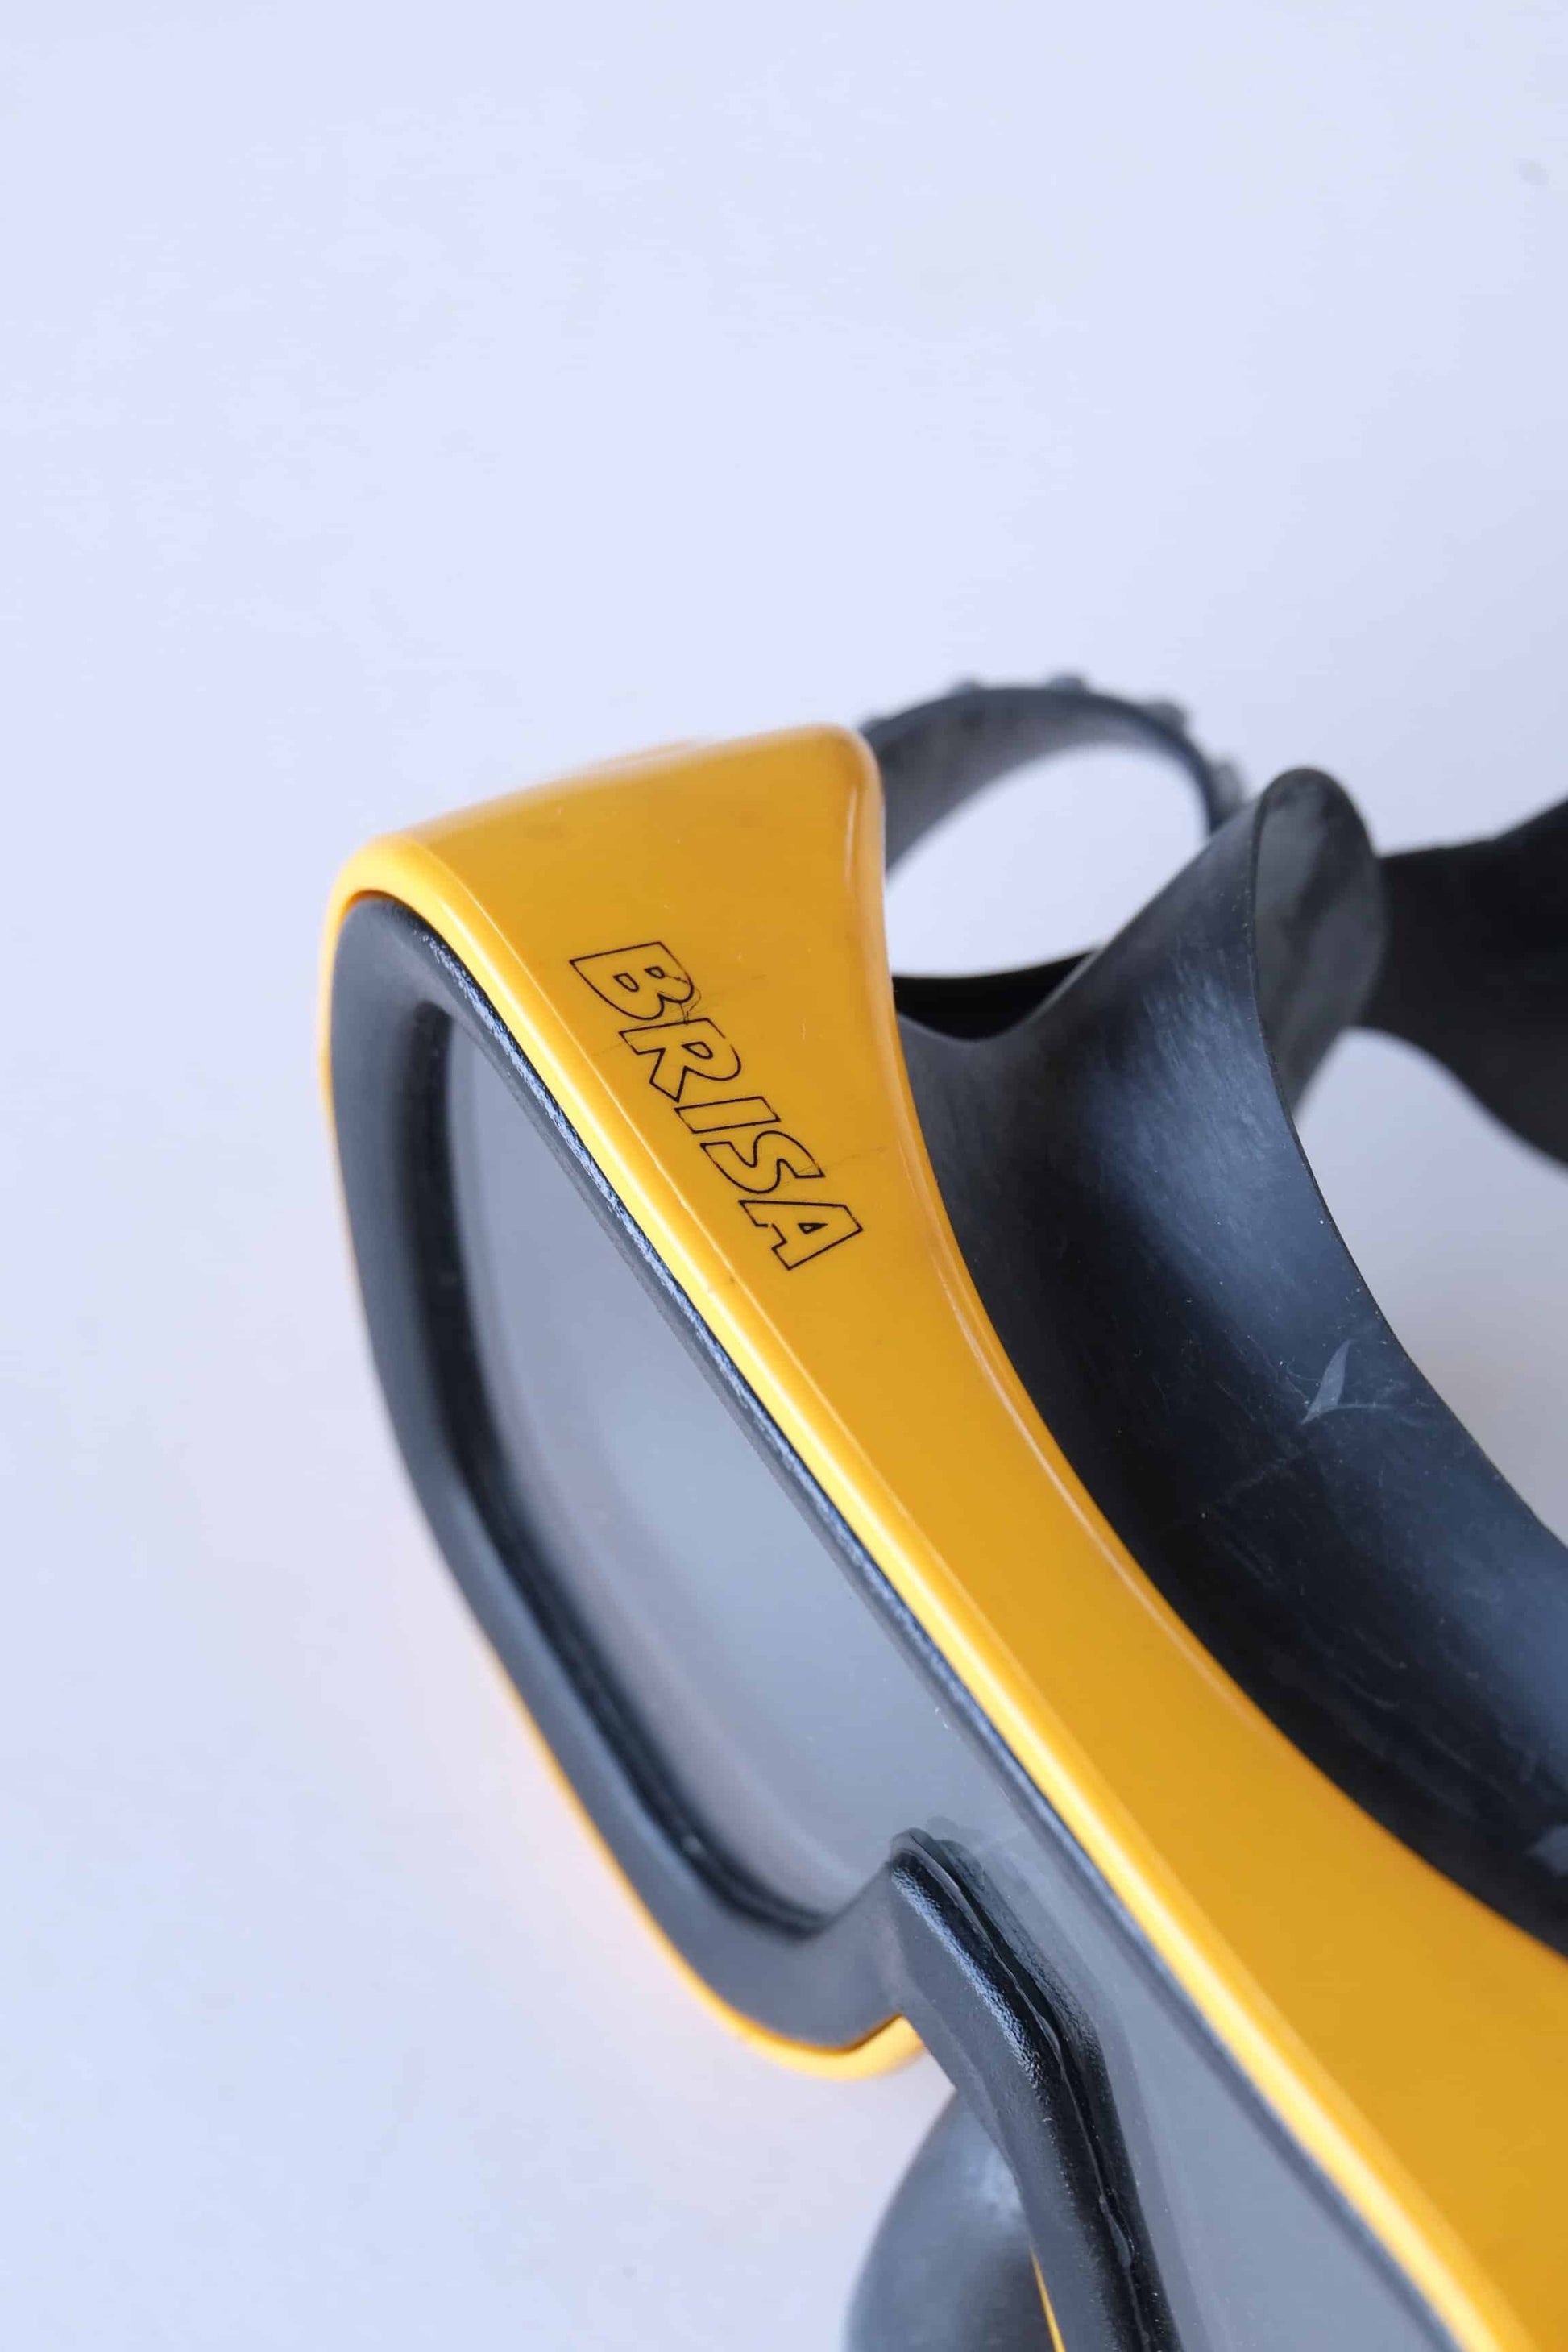 NEMROD Brisa 90's Diving Mask yellow and black close up